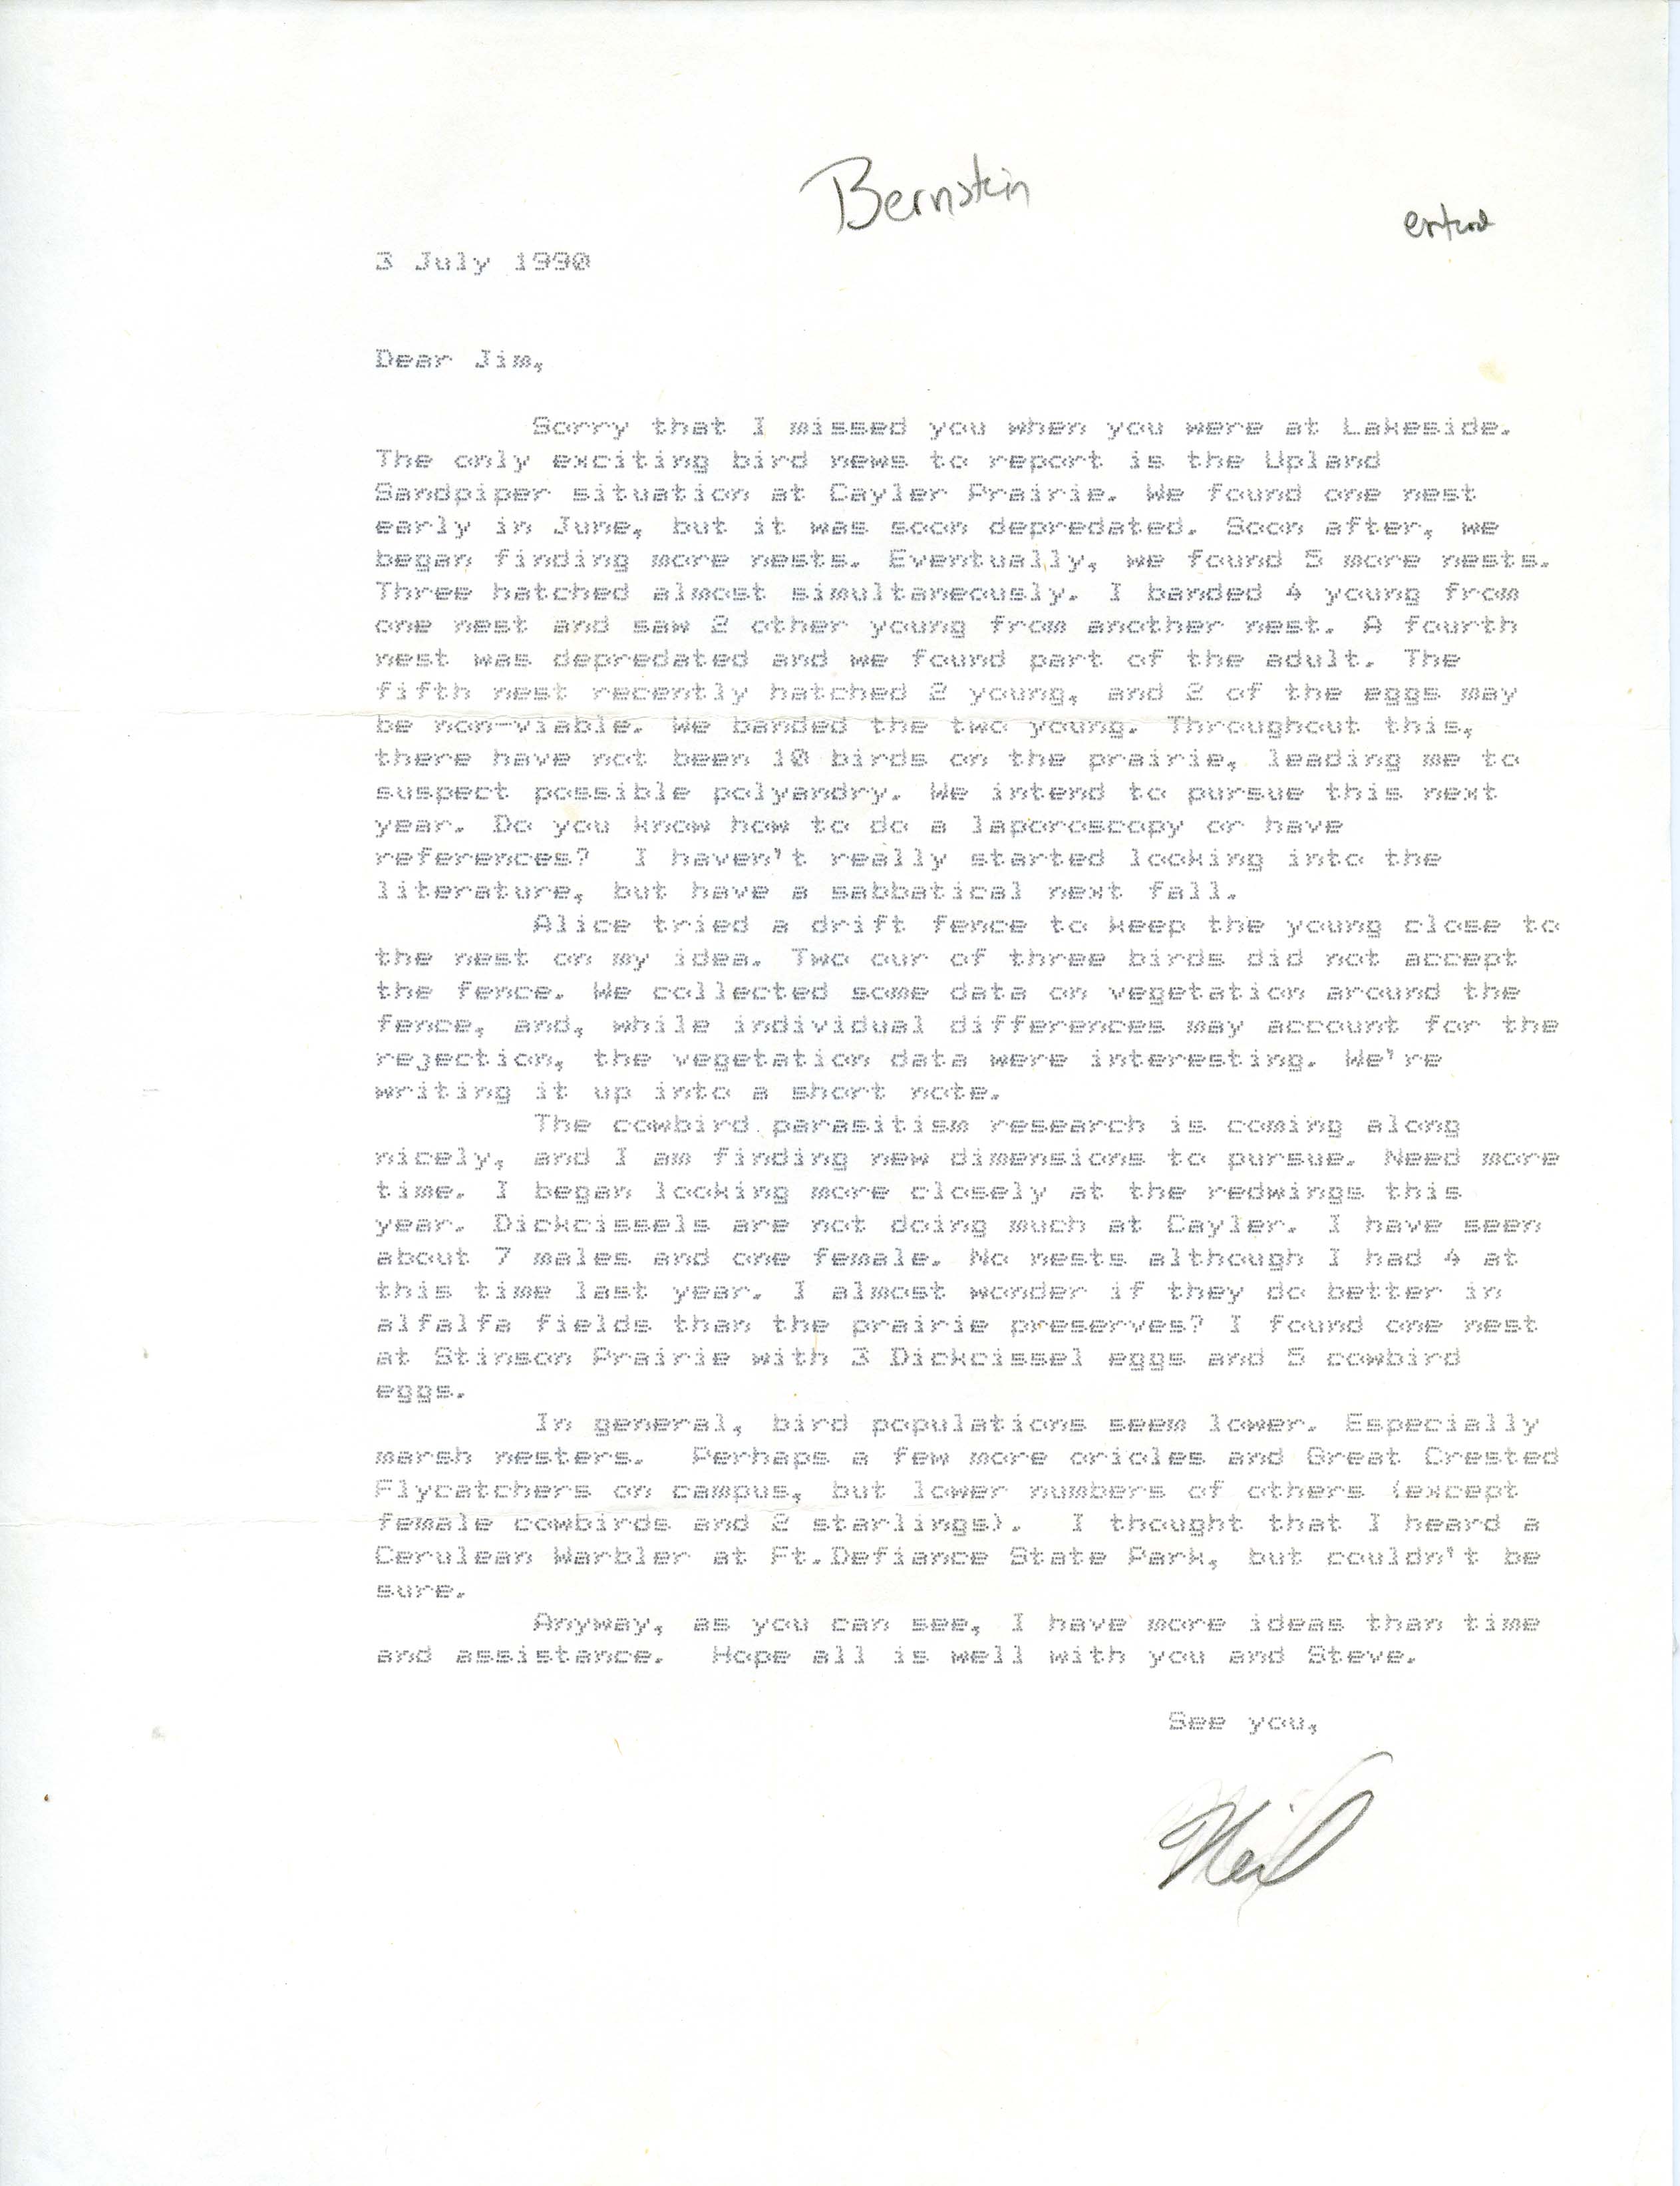 Neil Bernstein letter to Jim Dinsmore regarding bird sightings for IOU quarterly field report for summer 1990, July 3, 1990